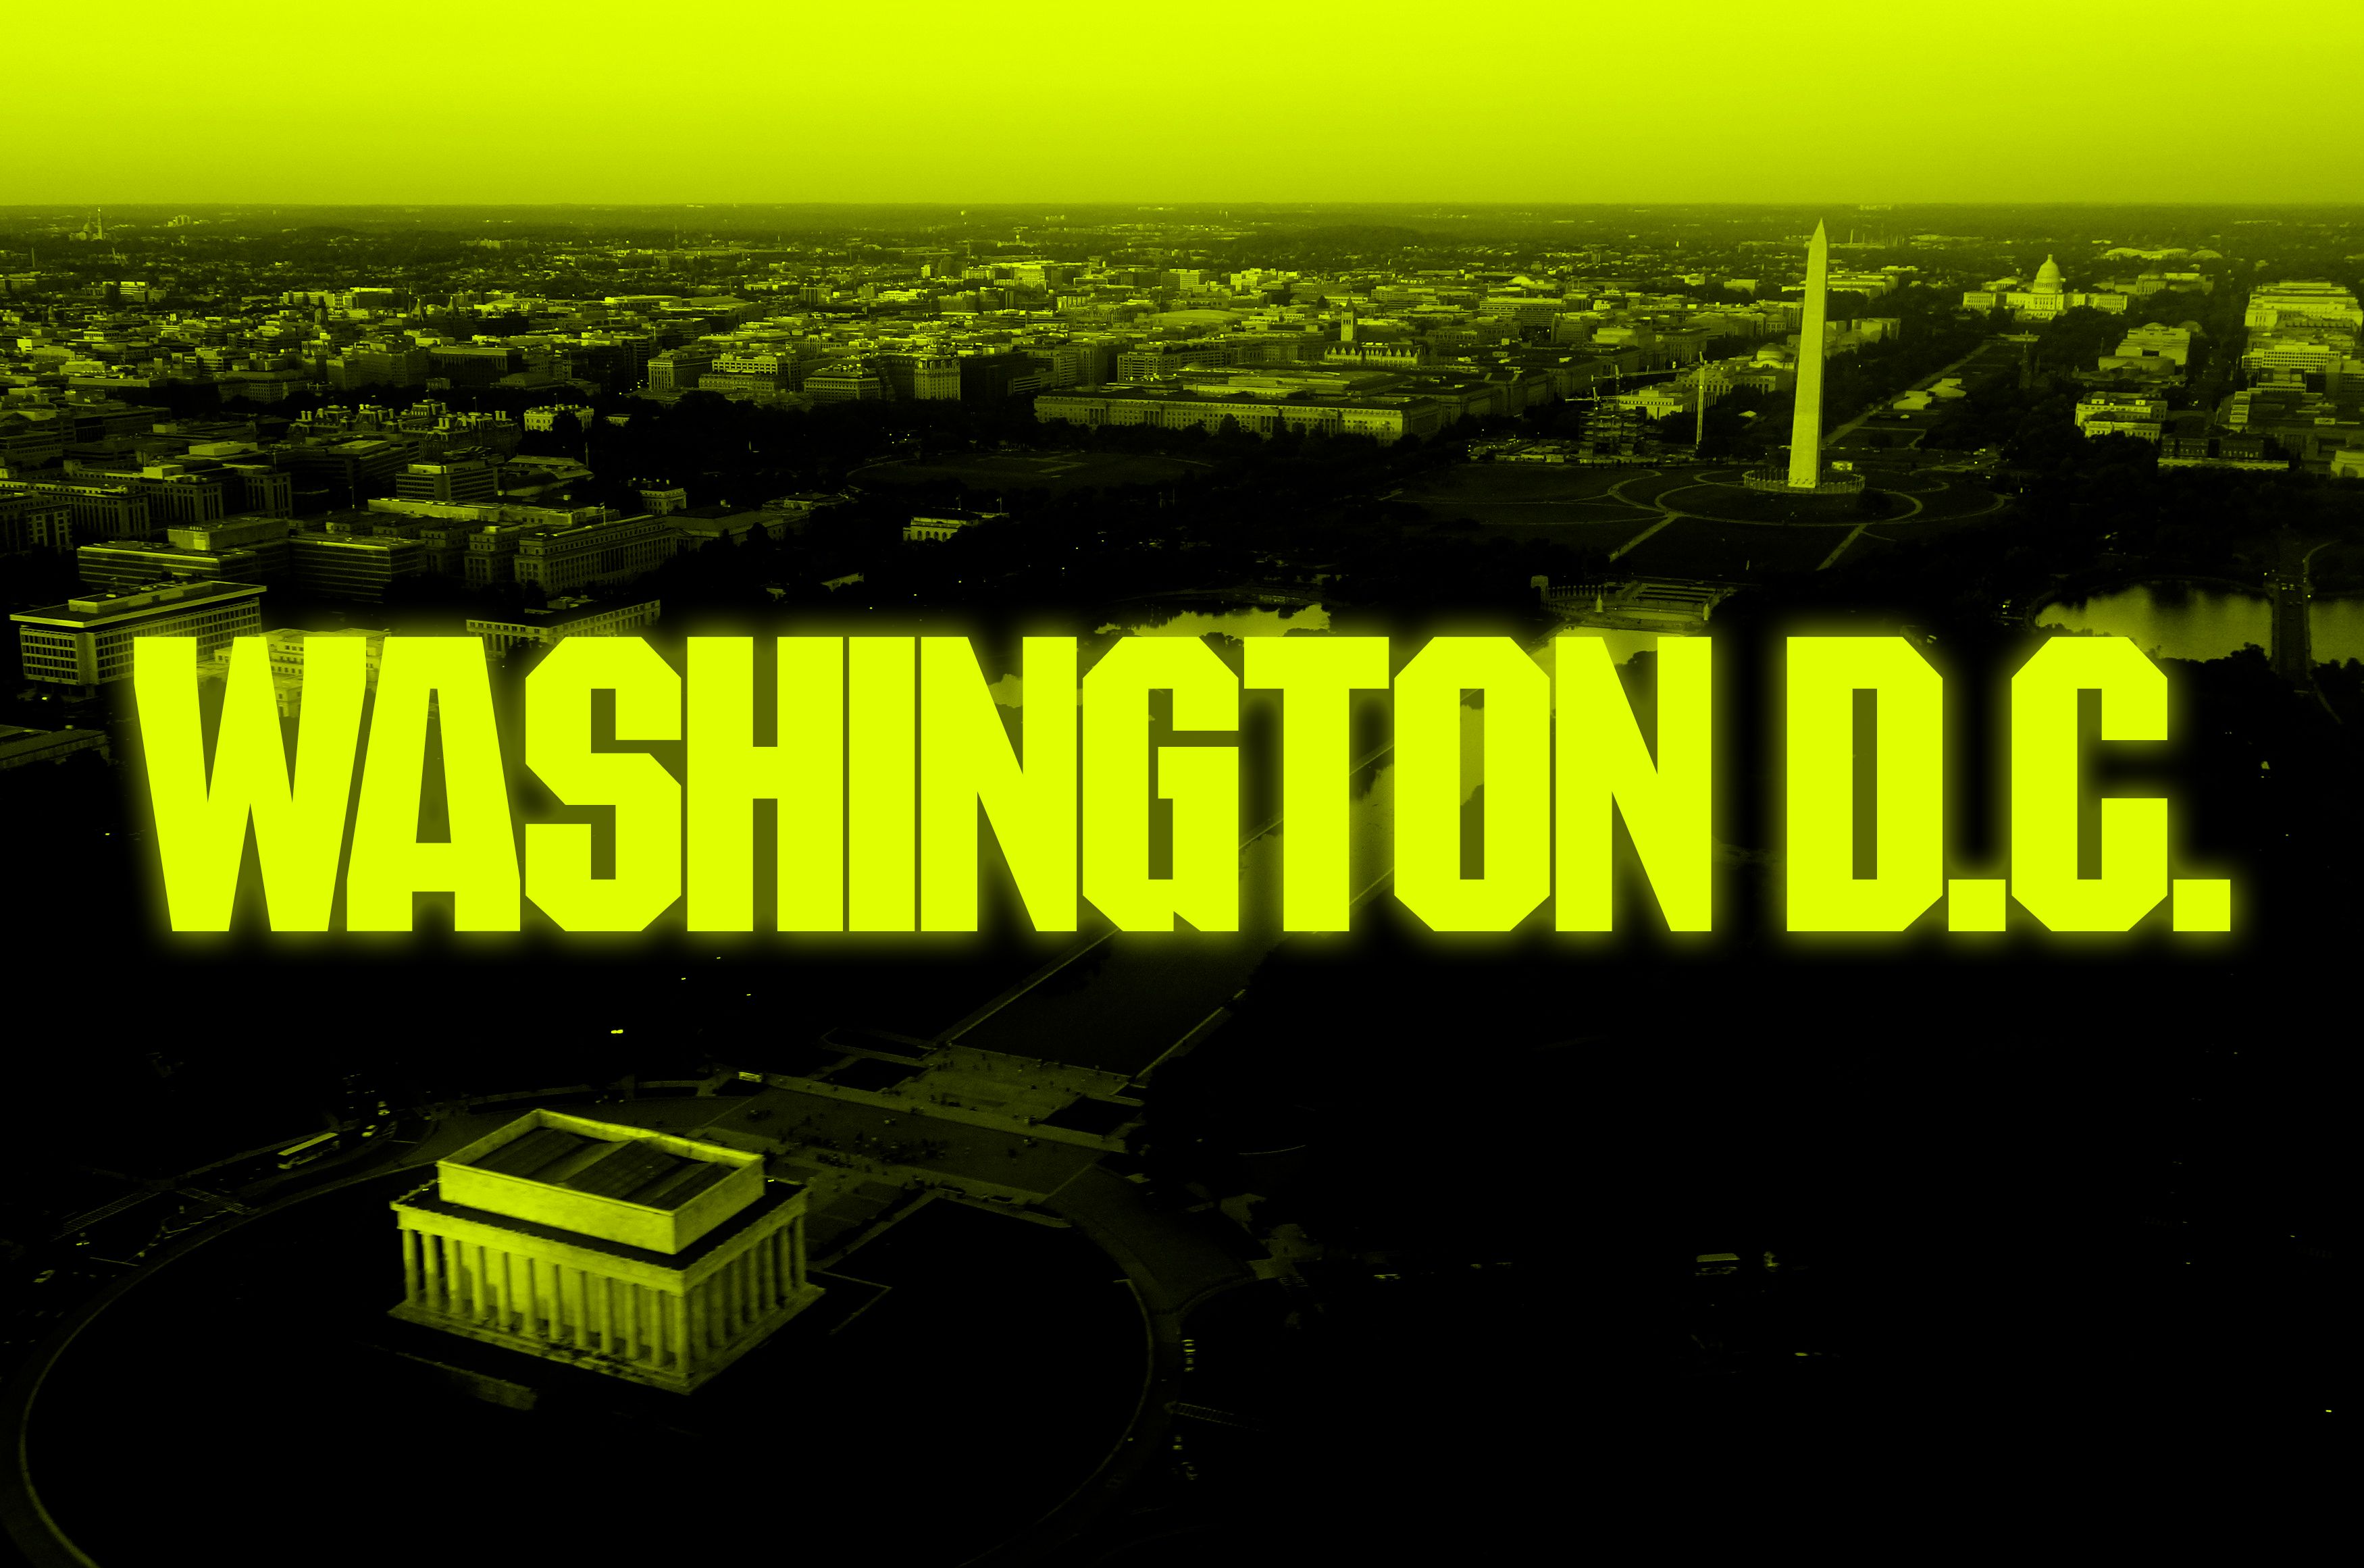 An image of Washington D.C.